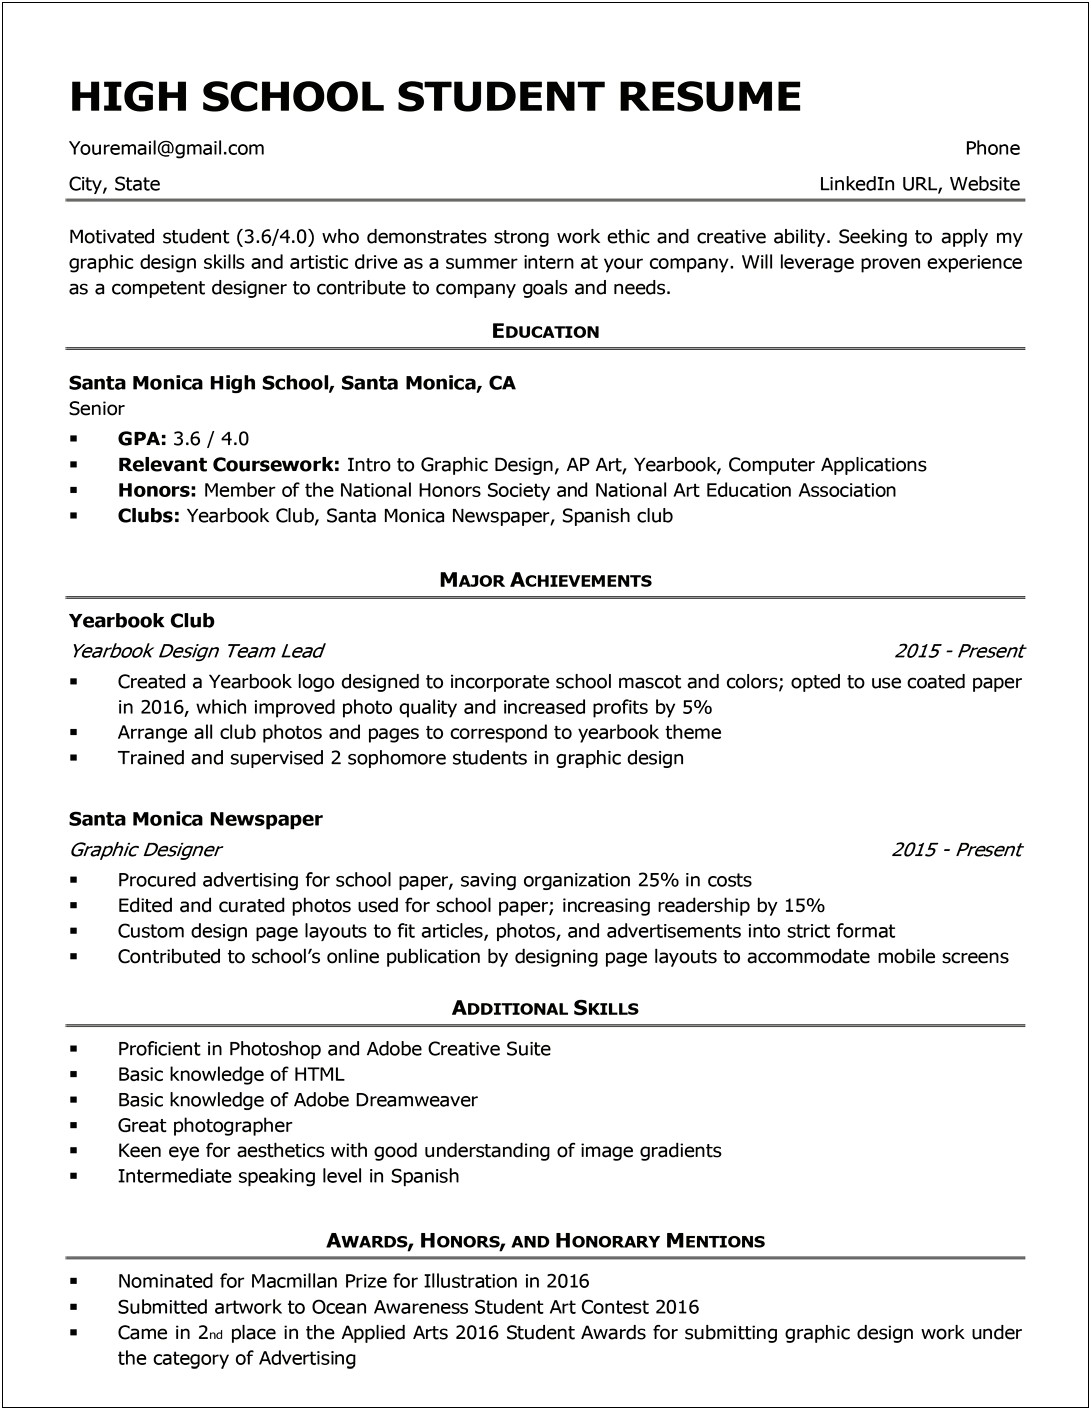 Recent High School Graduate Resume Objective